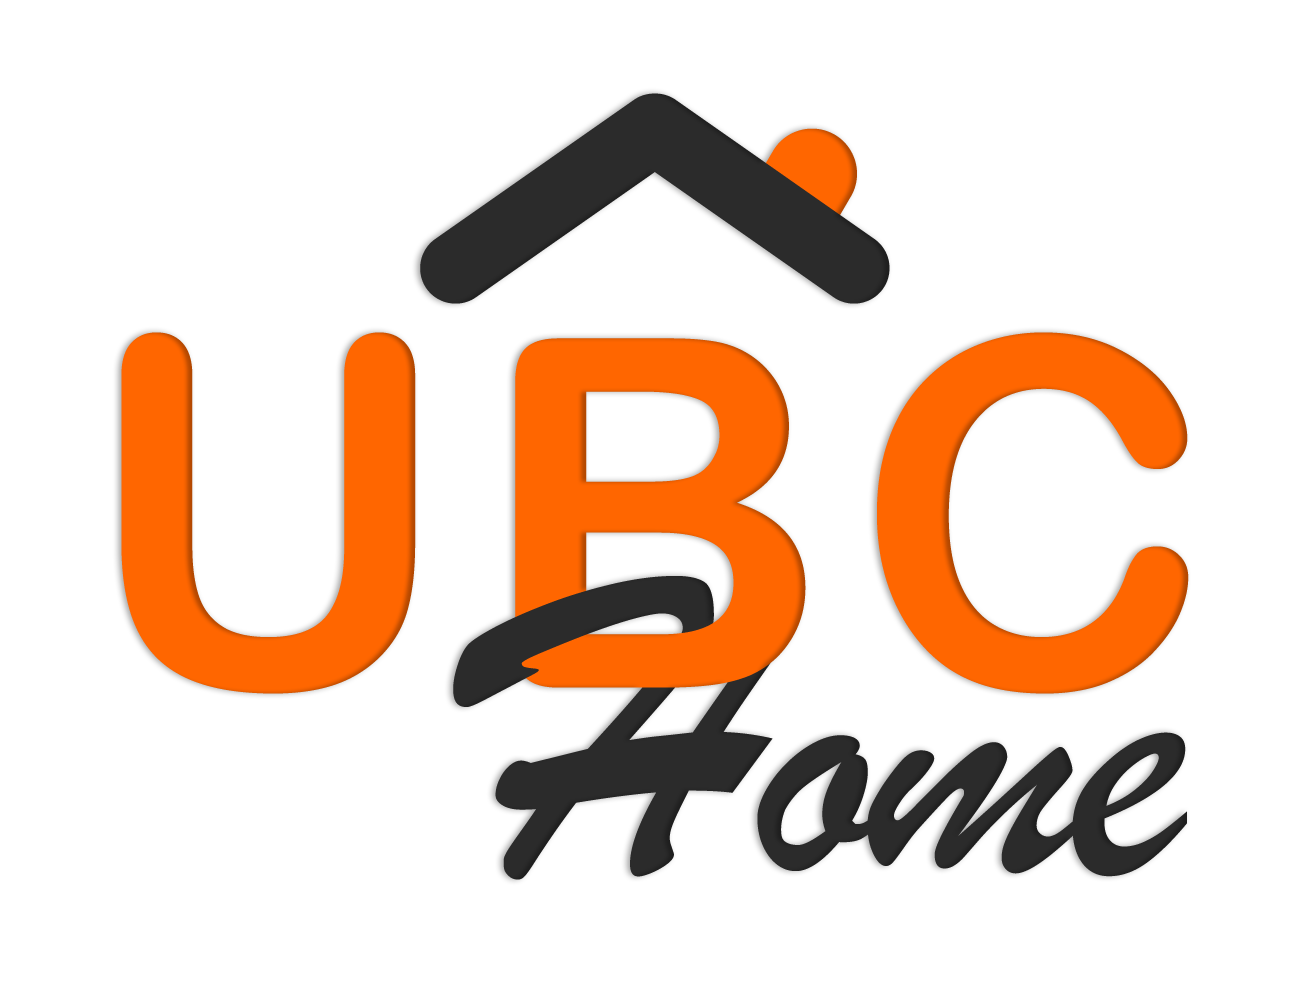 UBC Home - للأثاث والاكسسوارات